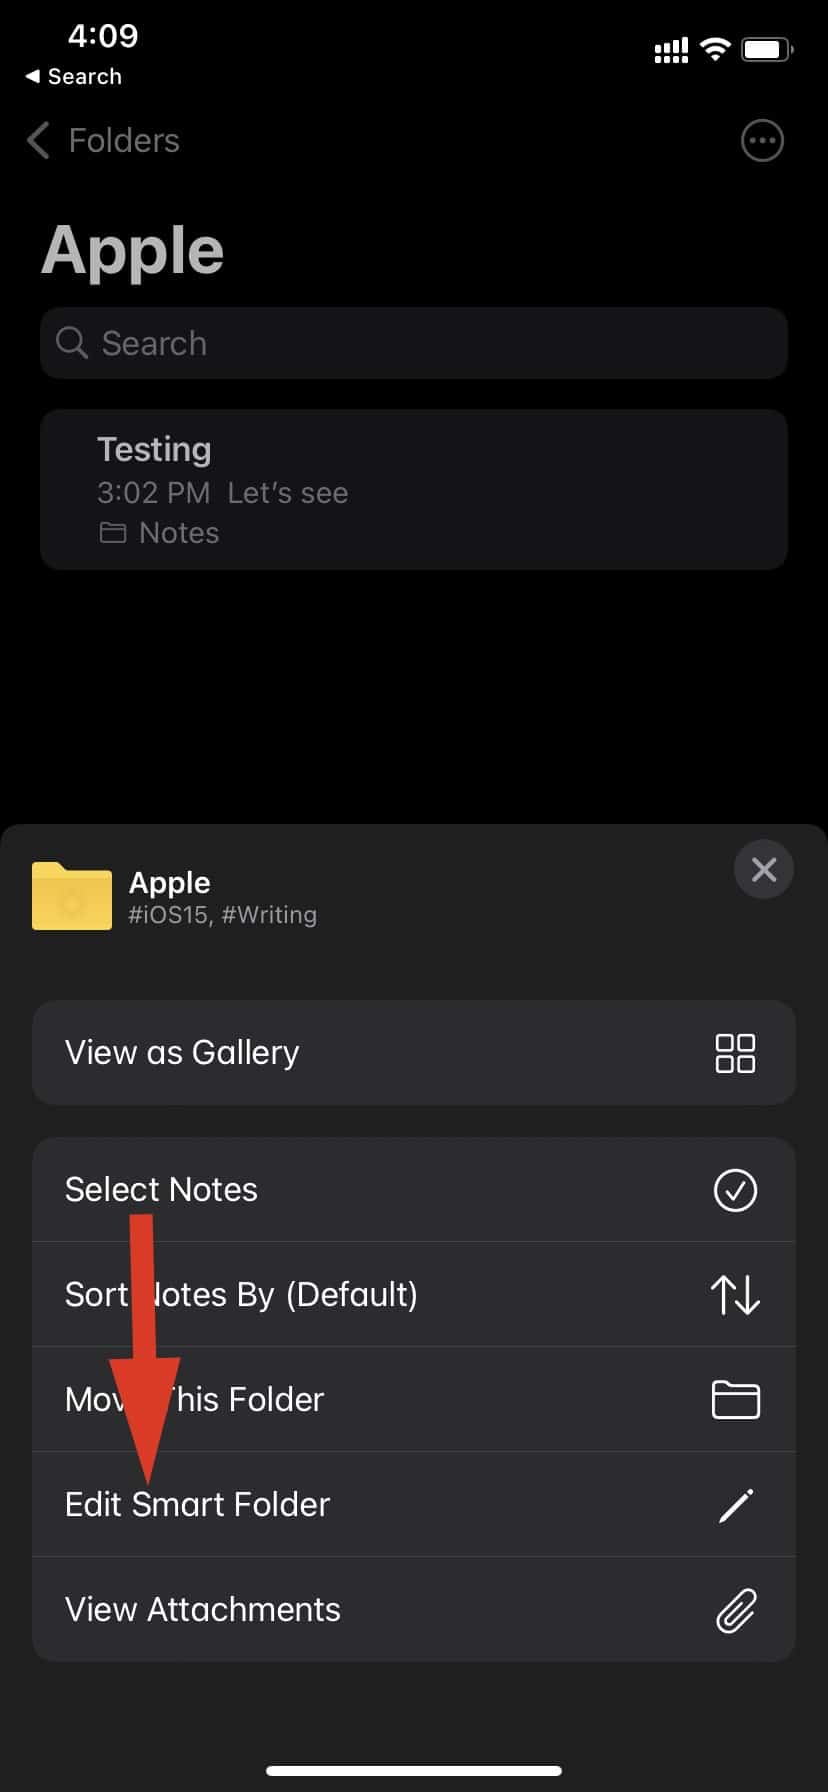 edit smart folder on iPhone